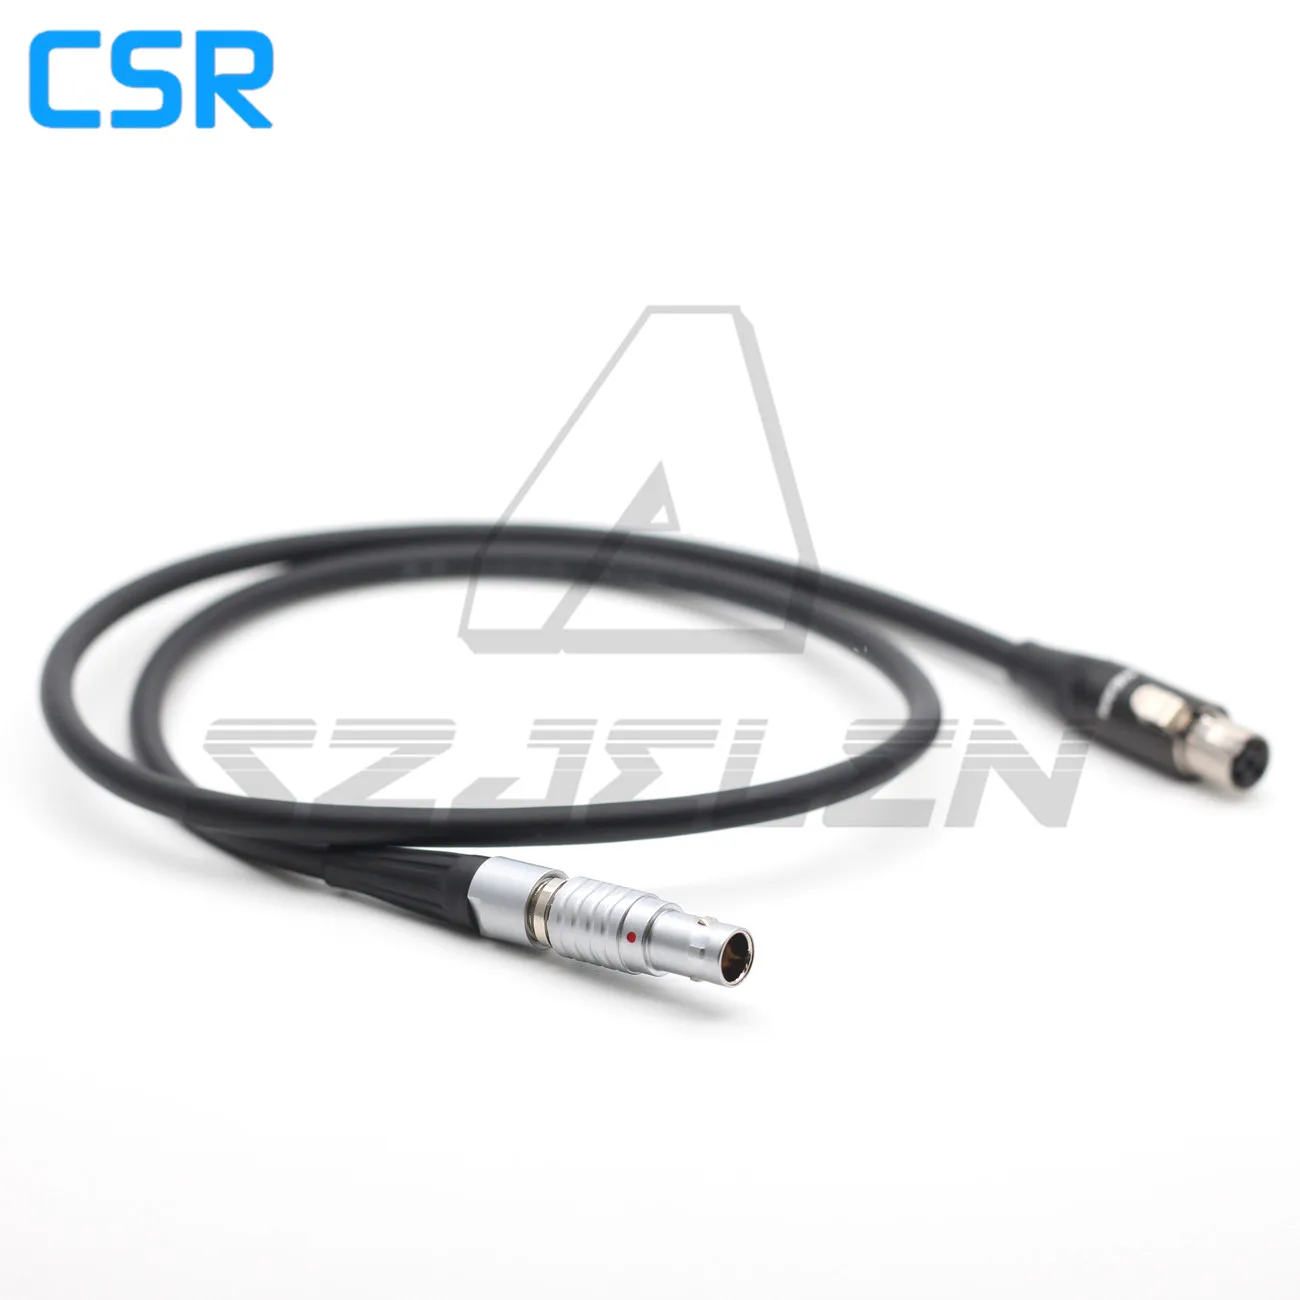 ARRI Alexa mini/XT / SONY Camera 0B 2pin 12V  to mini xlr 4 pin female for Tvlogic 055 056 058 Monitor power cable